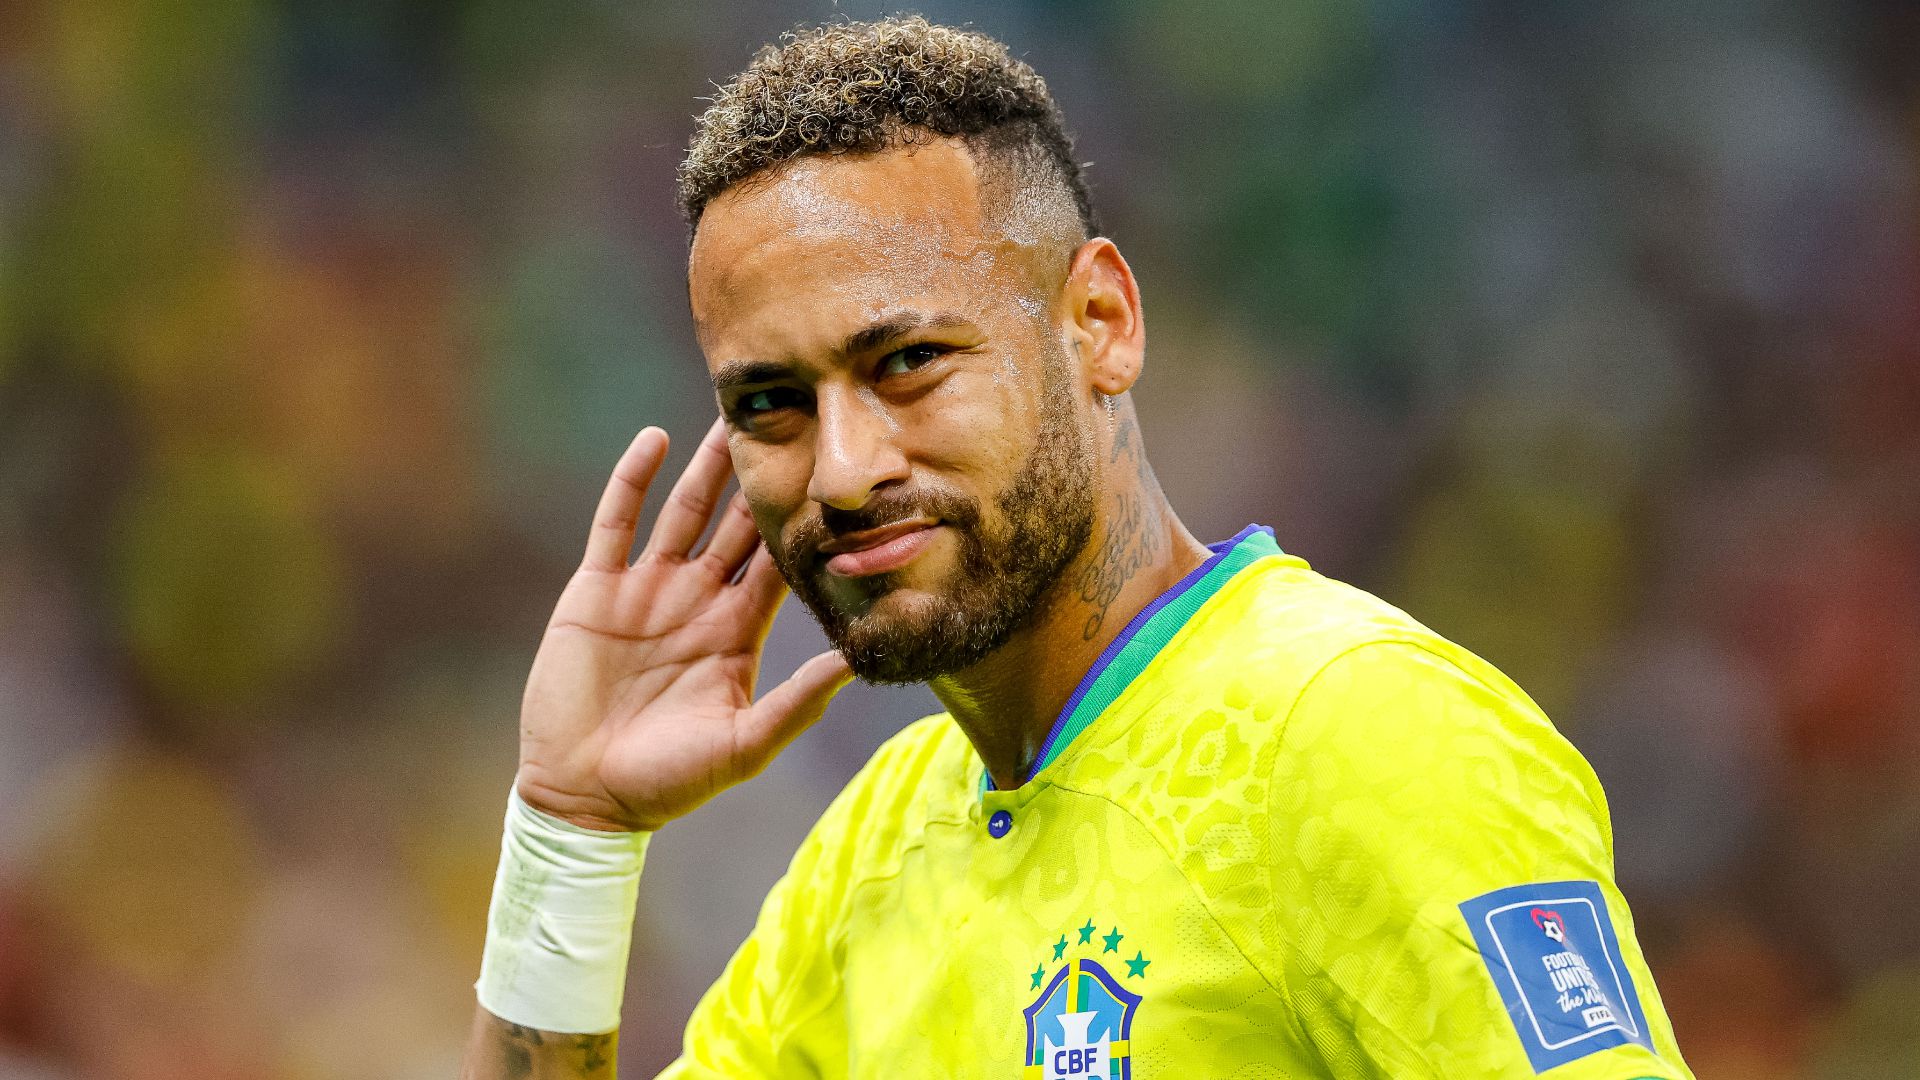 Work and play - Brazil's samba star Neymar has it all